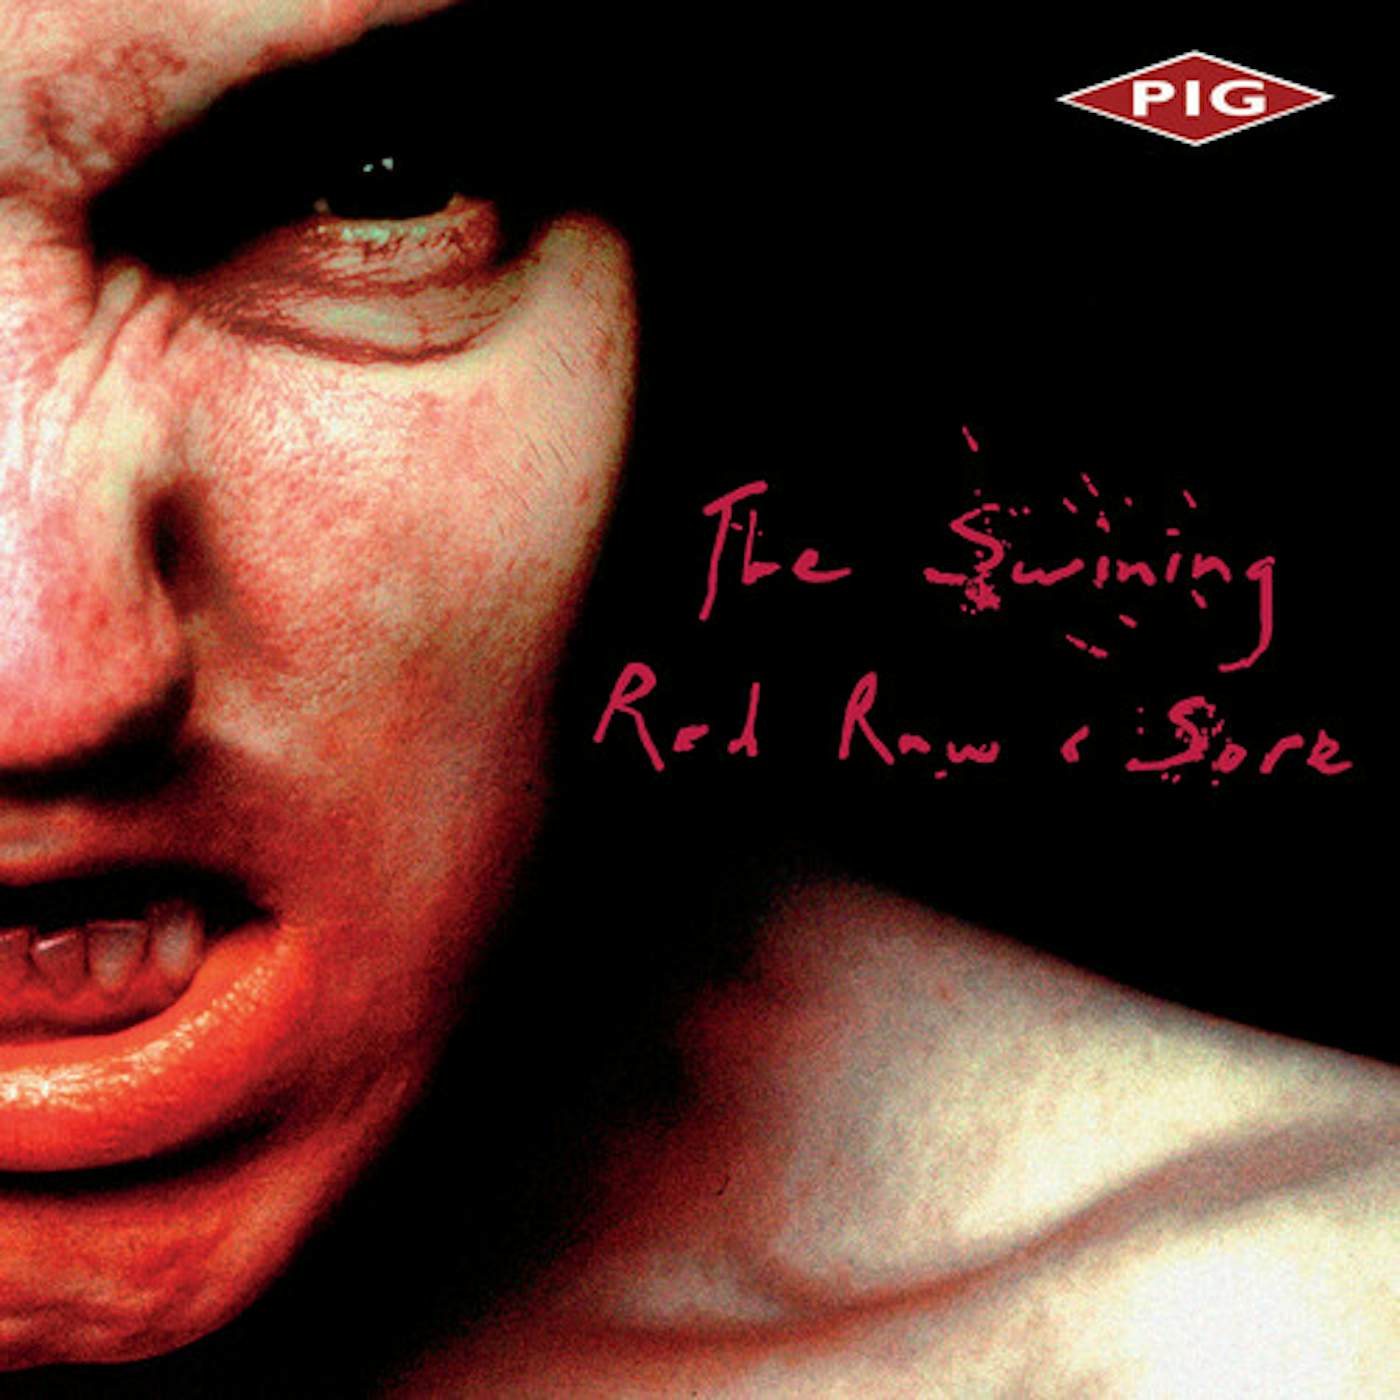 PIG SWINING-RED RAW & SORE Vinyl Record